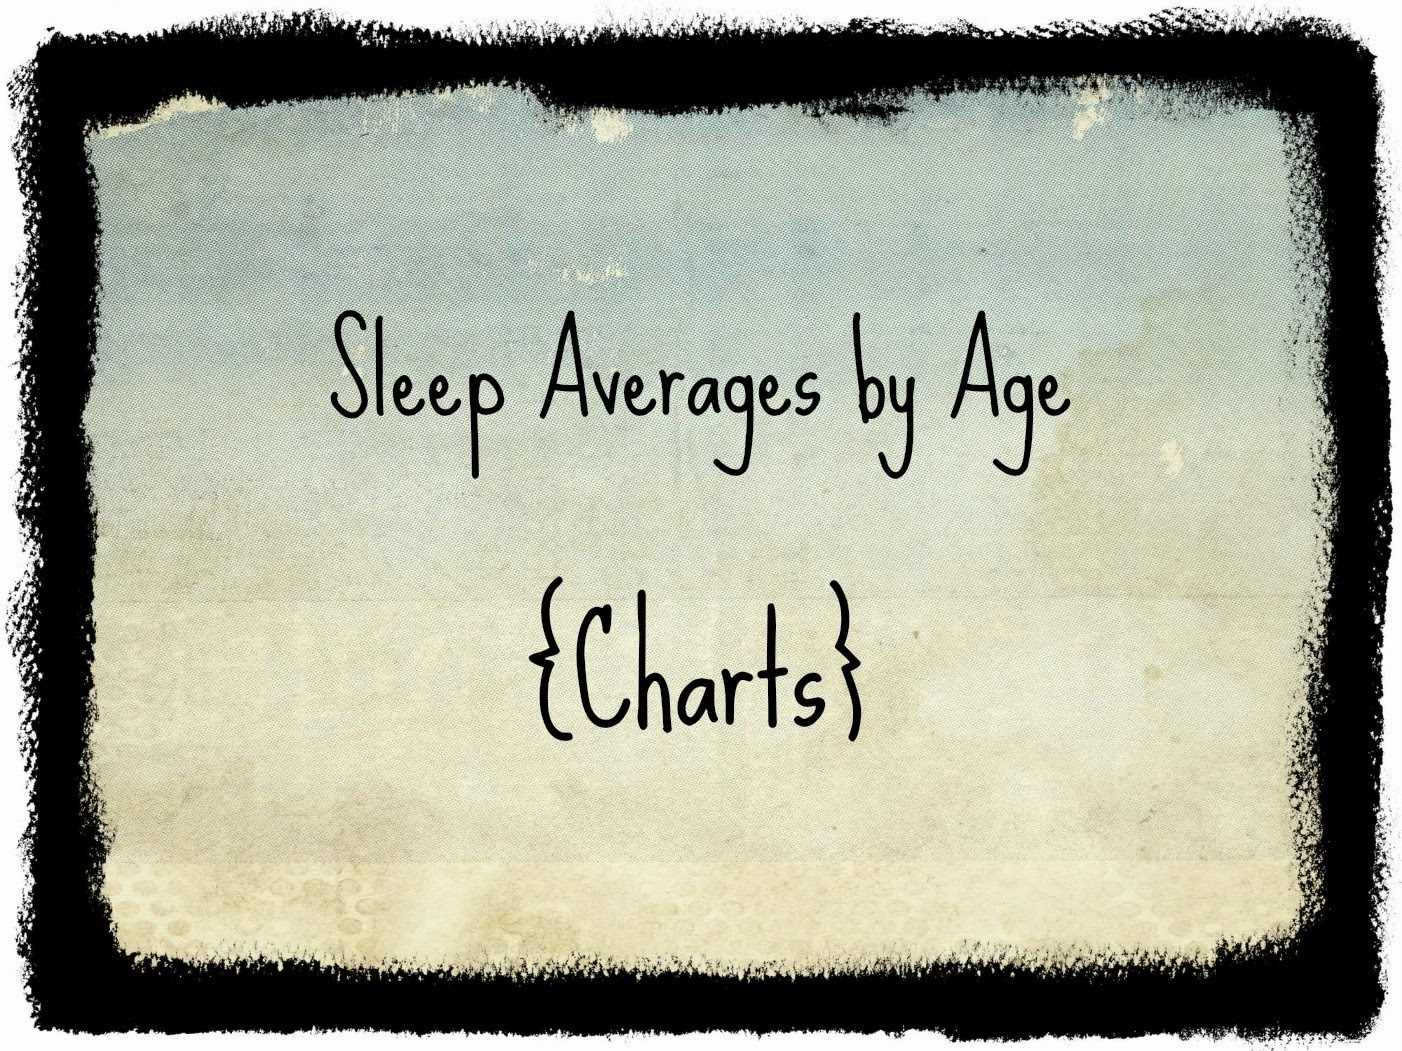 Sleep Chart According To Age